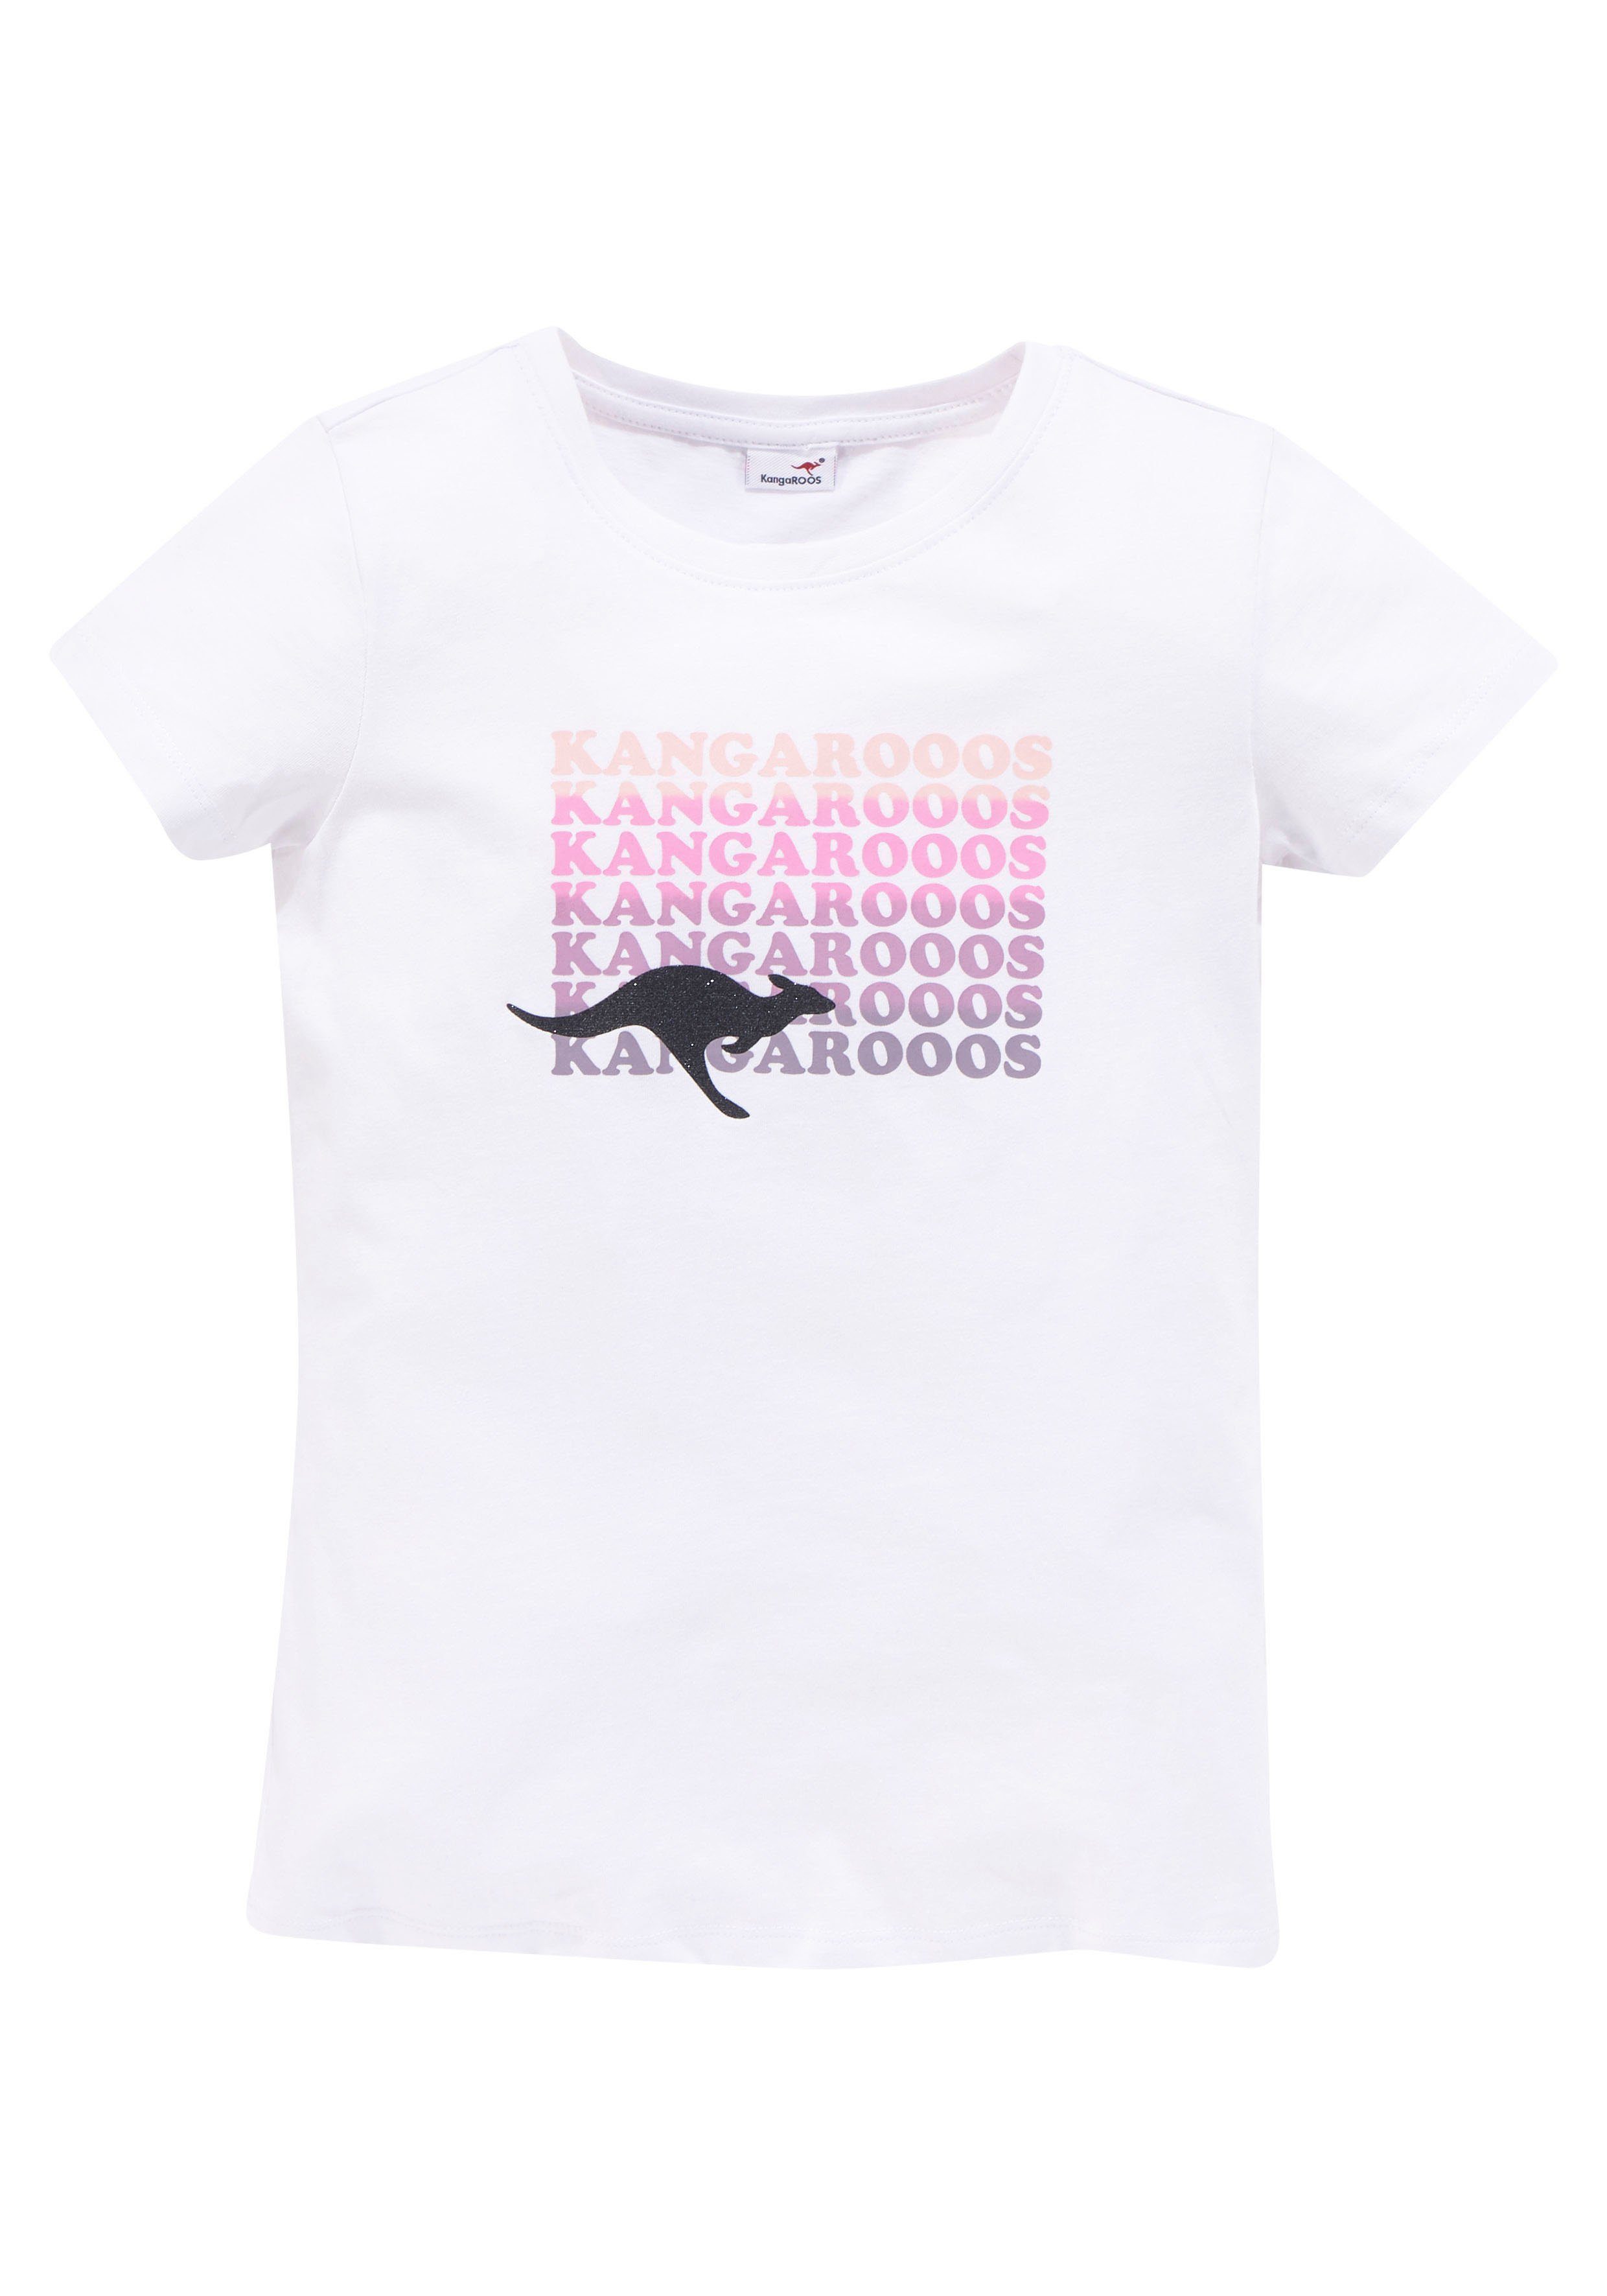 KangaROOS T-Shirt, Kangaroos T-Shirt für Mädchen